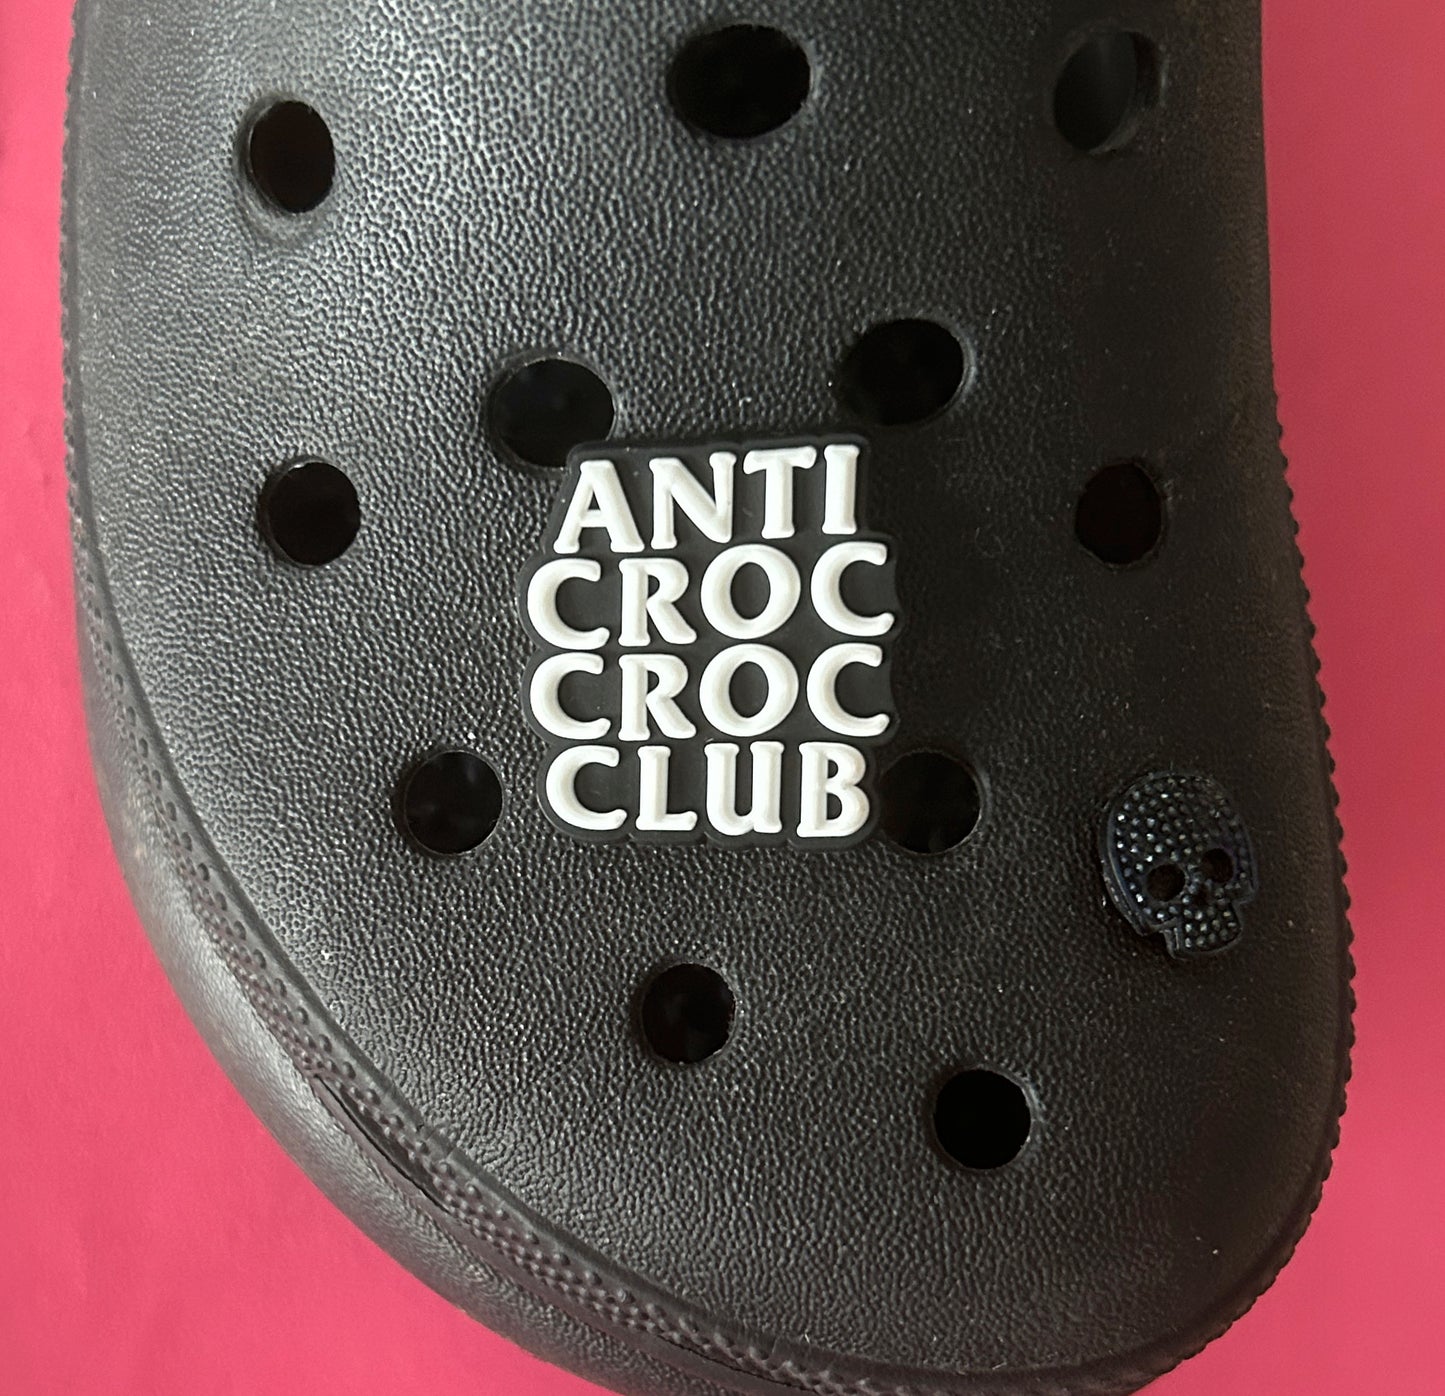 anti croc croc club shoe charm. 